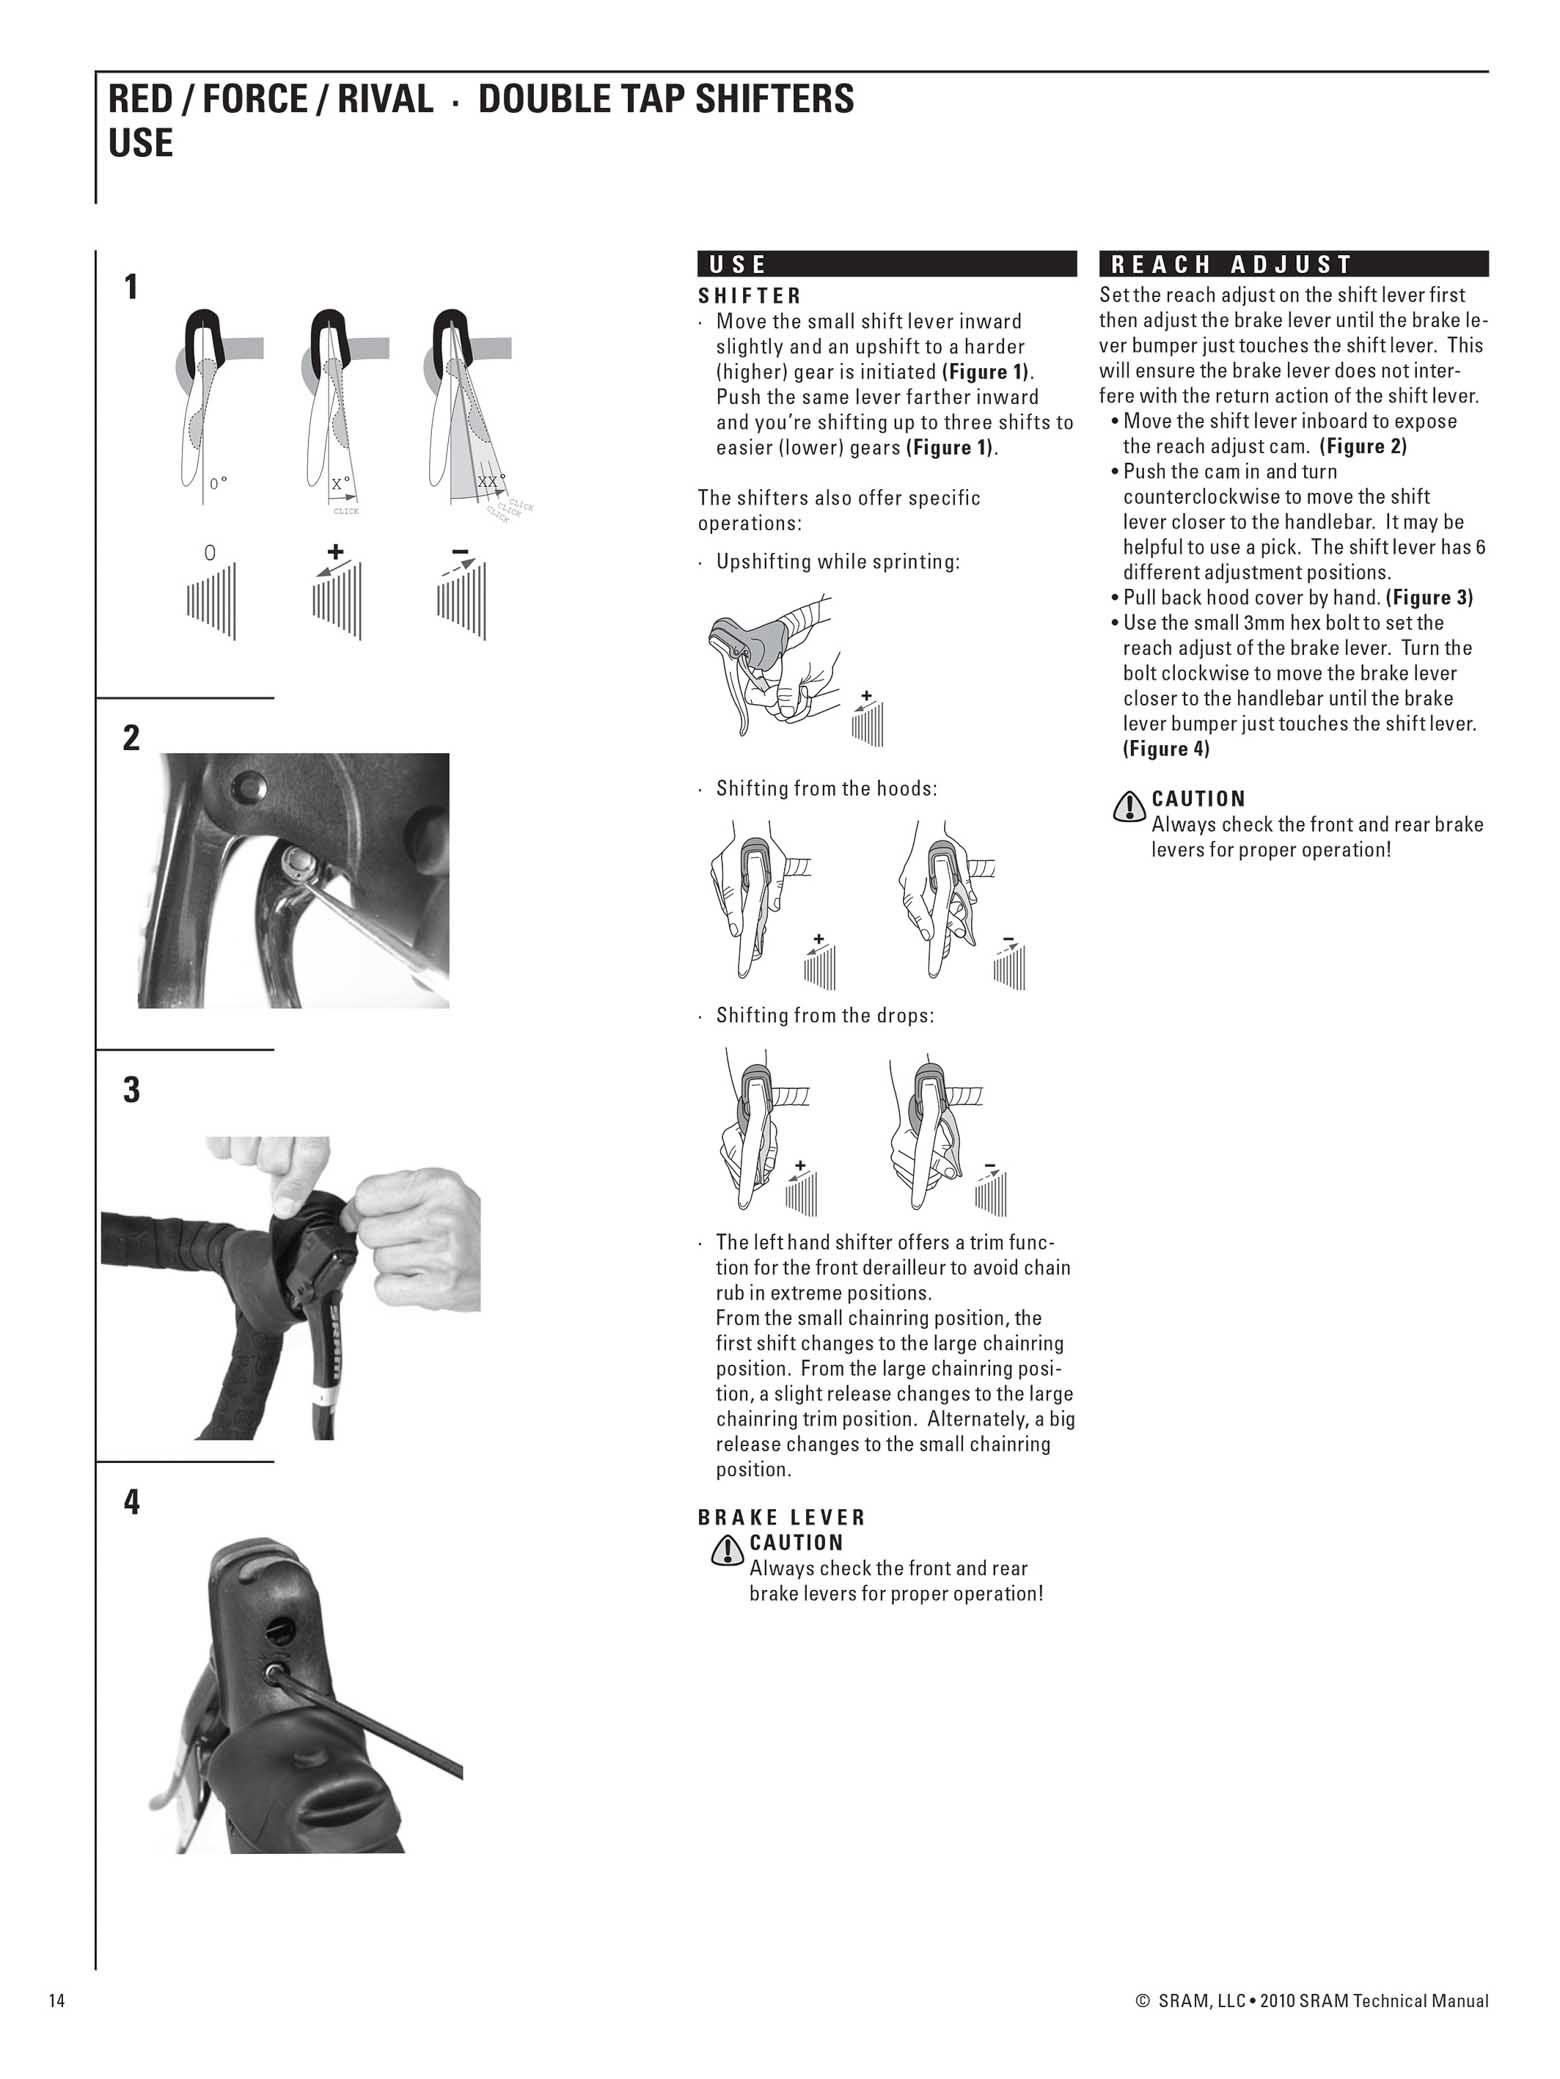 SRAM Technical Manual 2010 page 014 main image